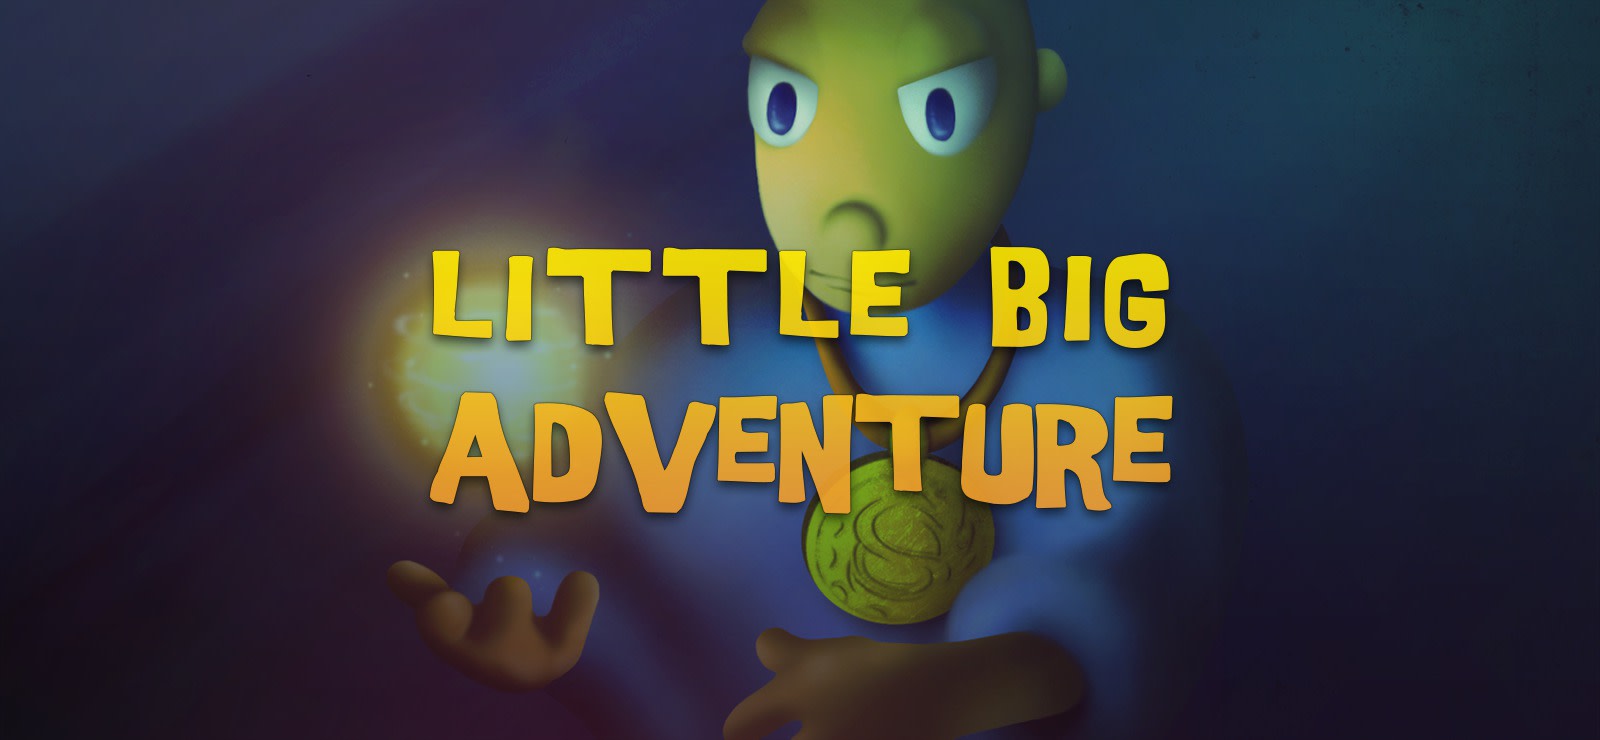 download twinsens little big adventure